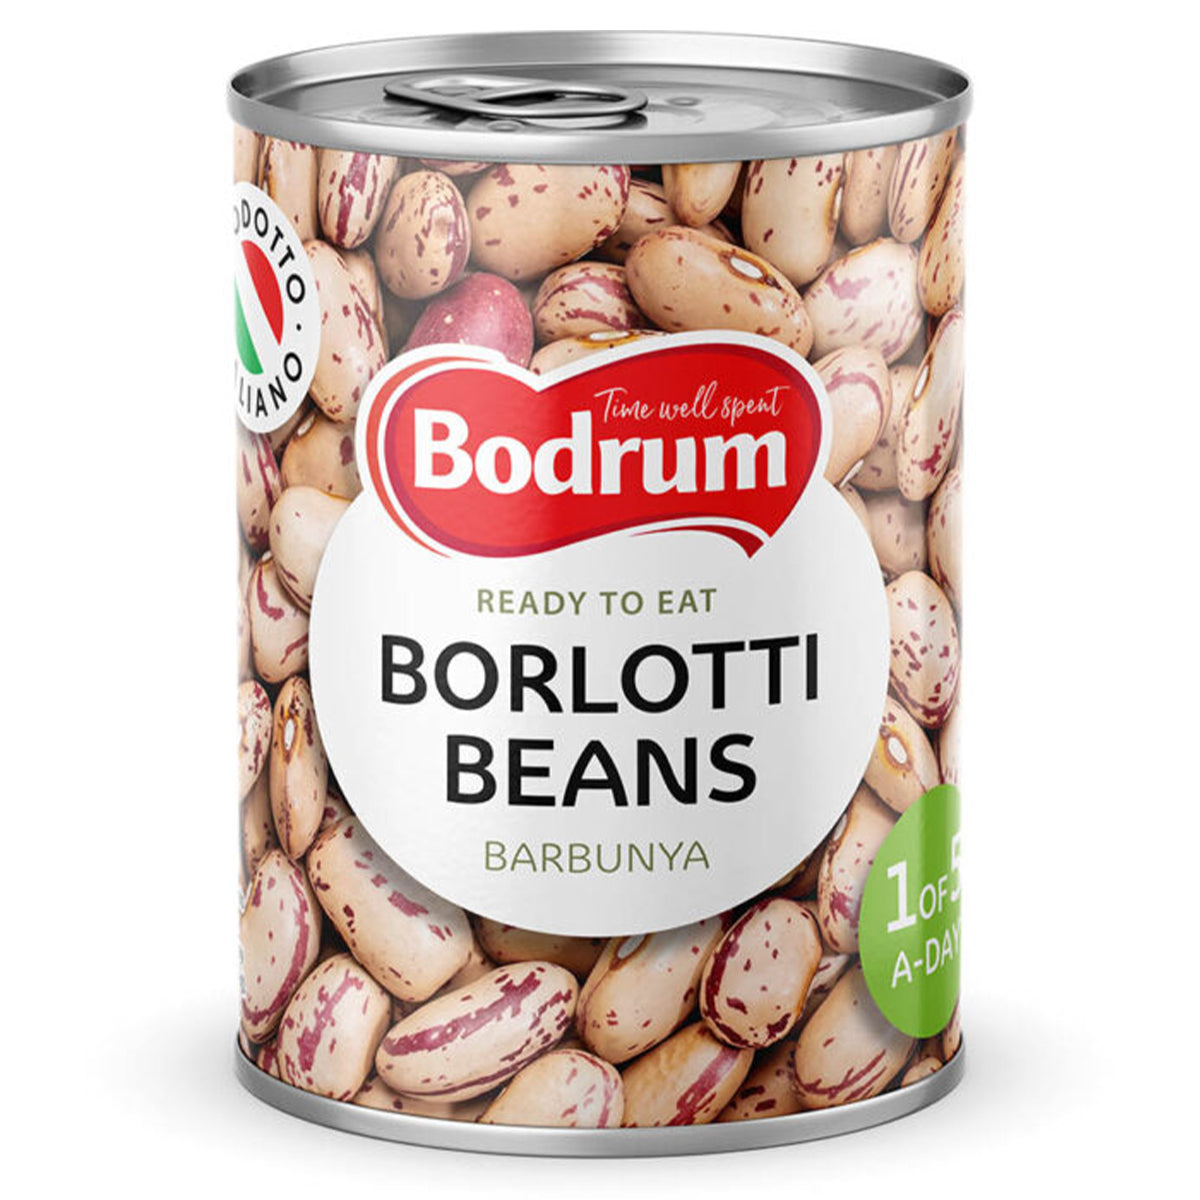 A tin of Bodrum - Borlotti Beans - 400g on a white background.